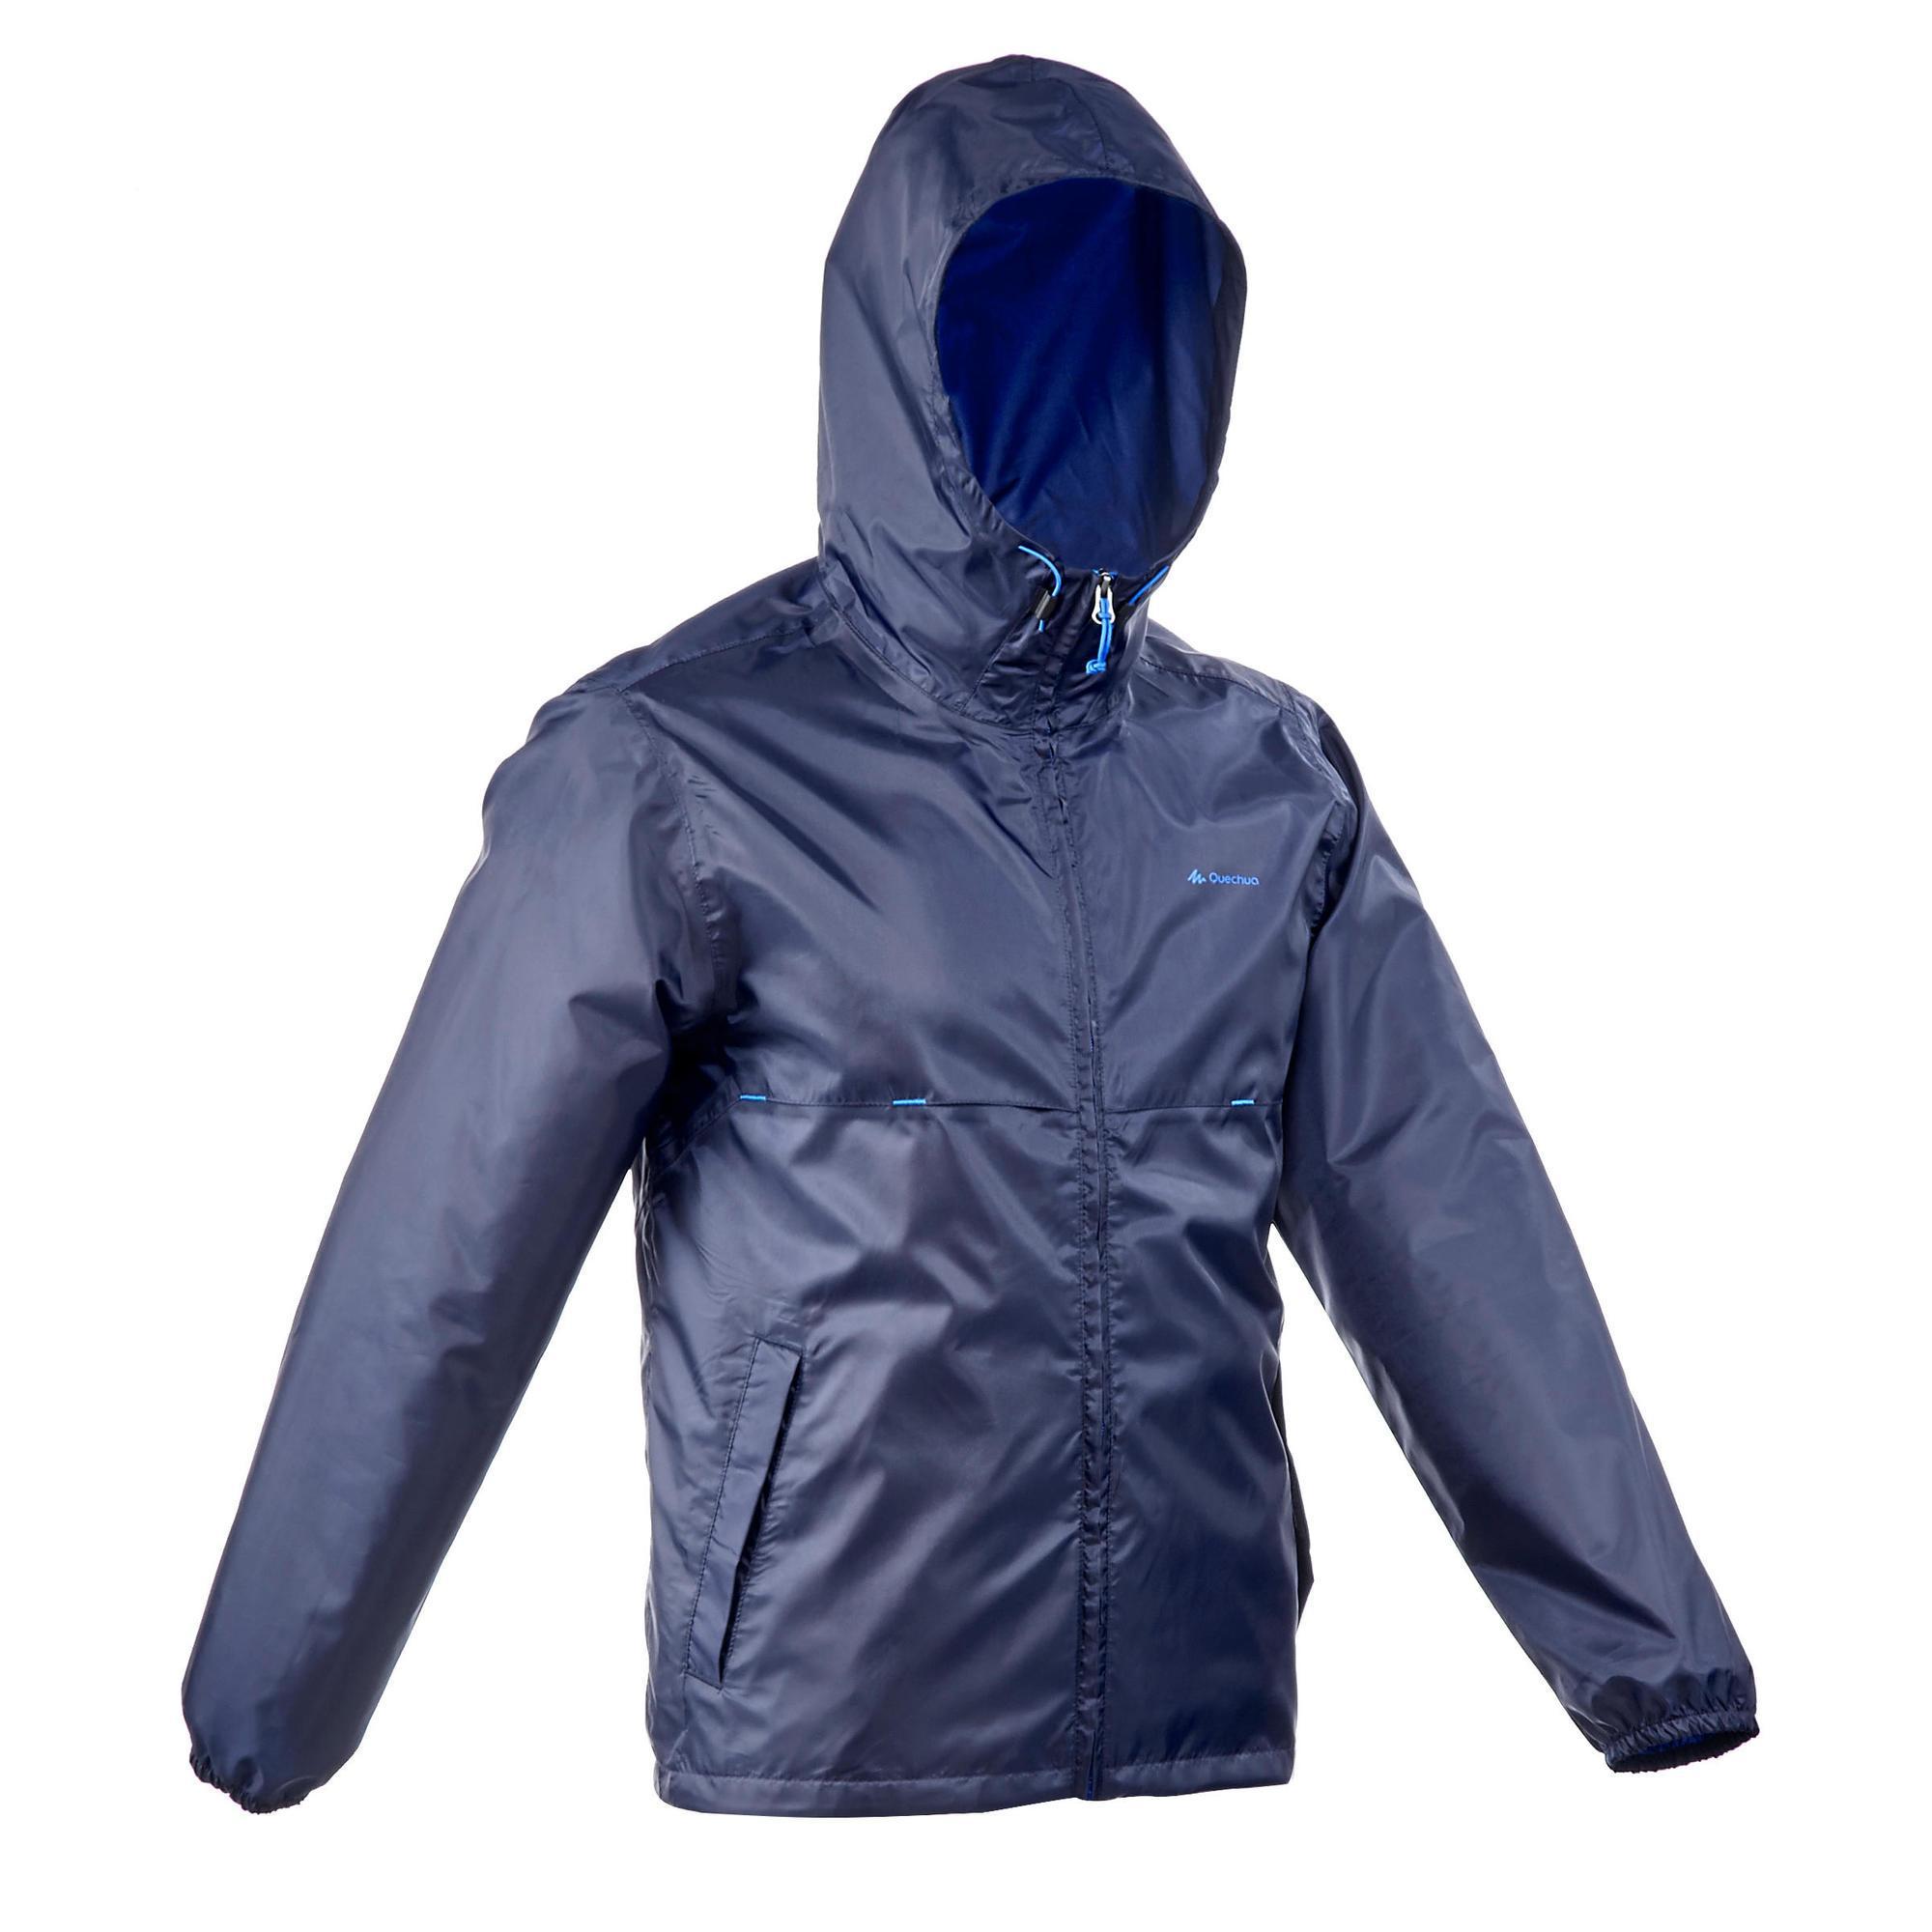 decathlon raincoat online shopping